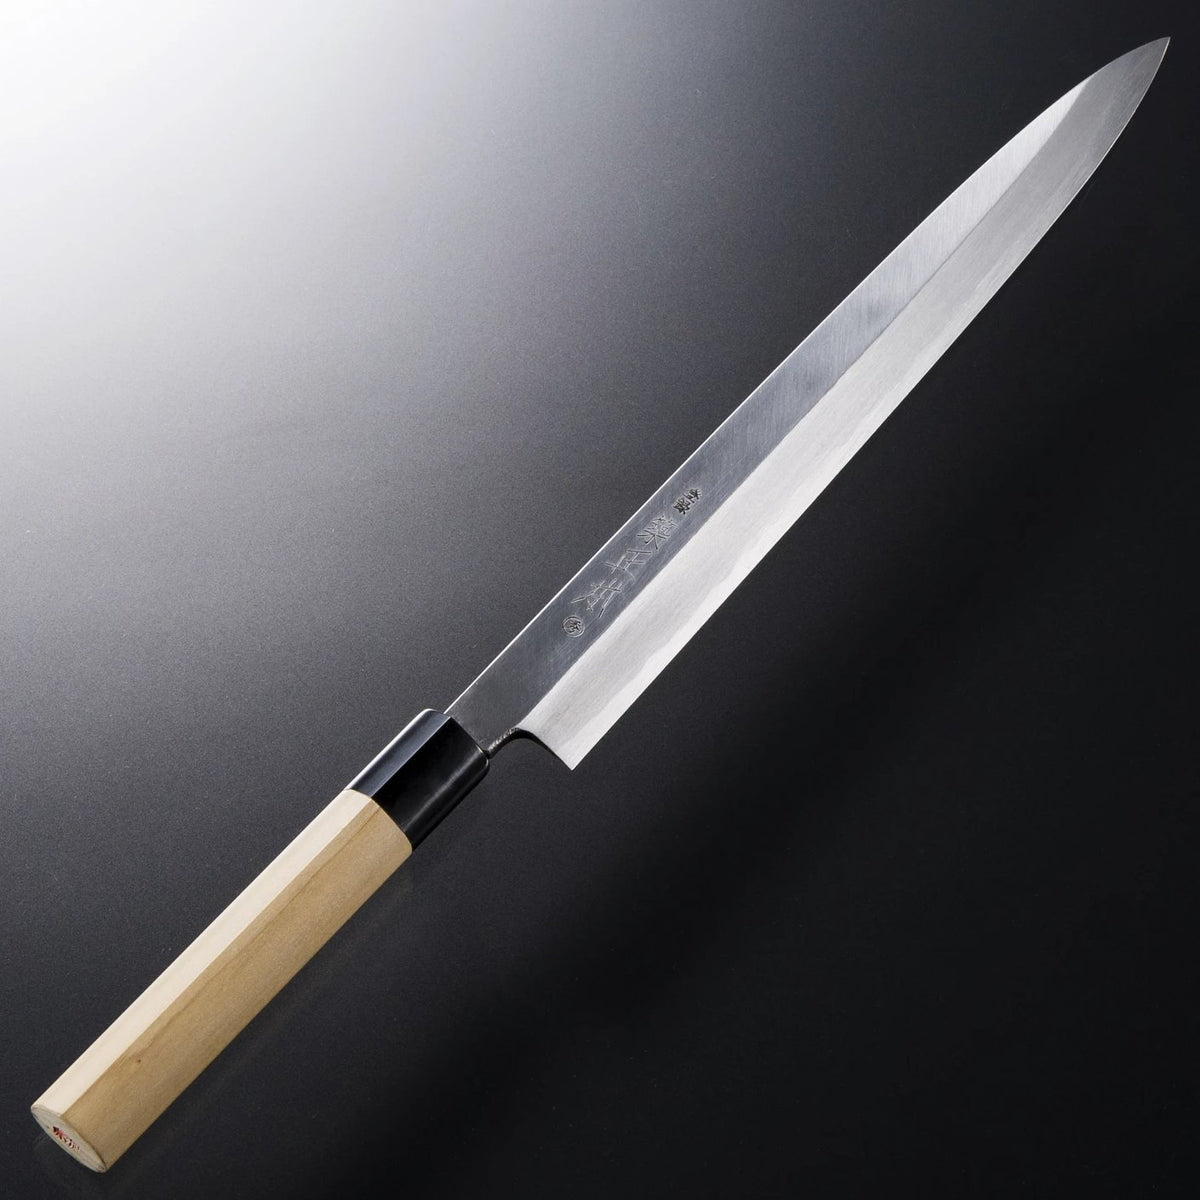 本霞柳刃庖刀 – 包丁の築地正本